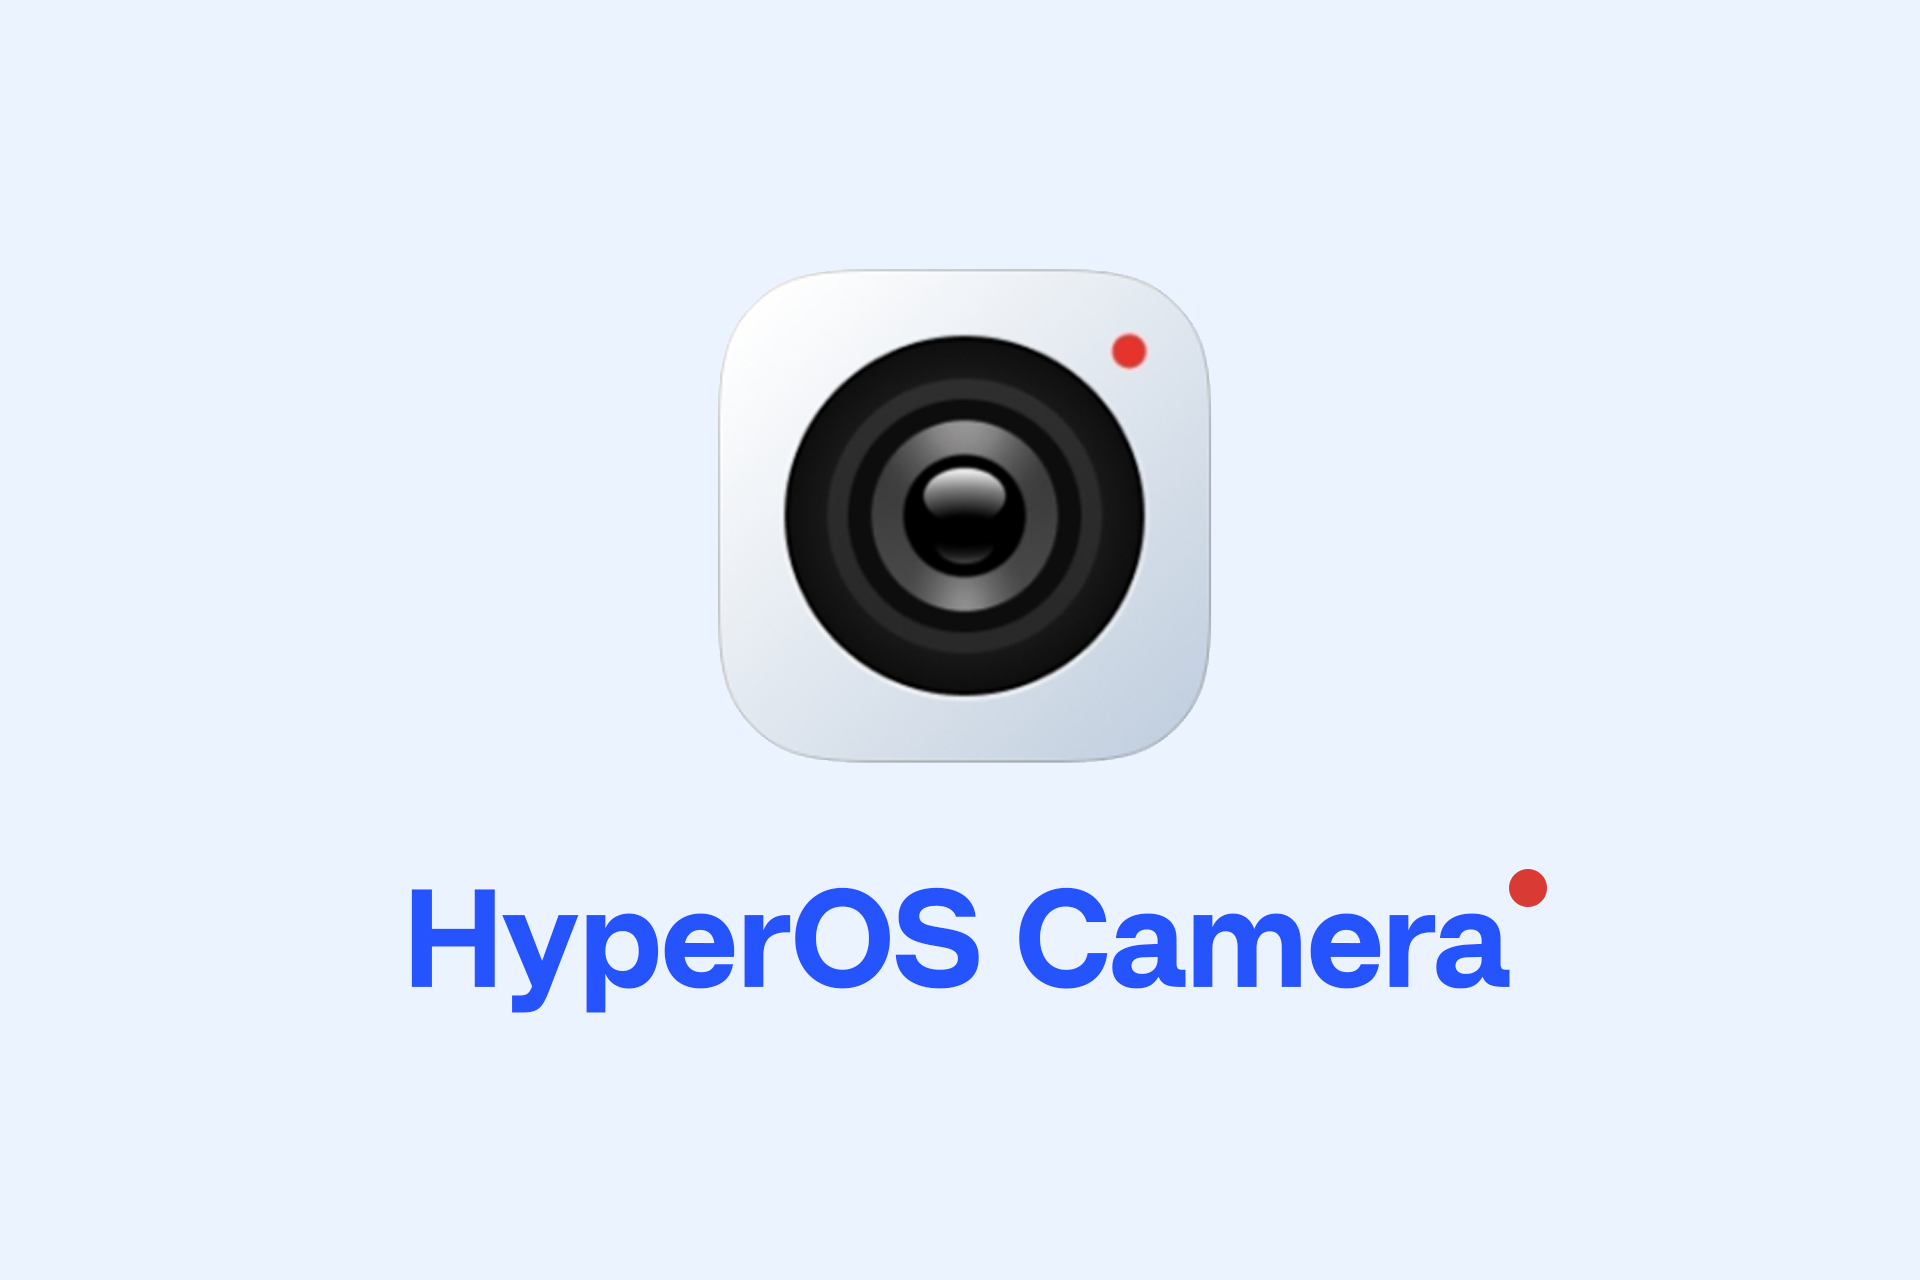 HyperOS camera app revealed, better camera experience expected!